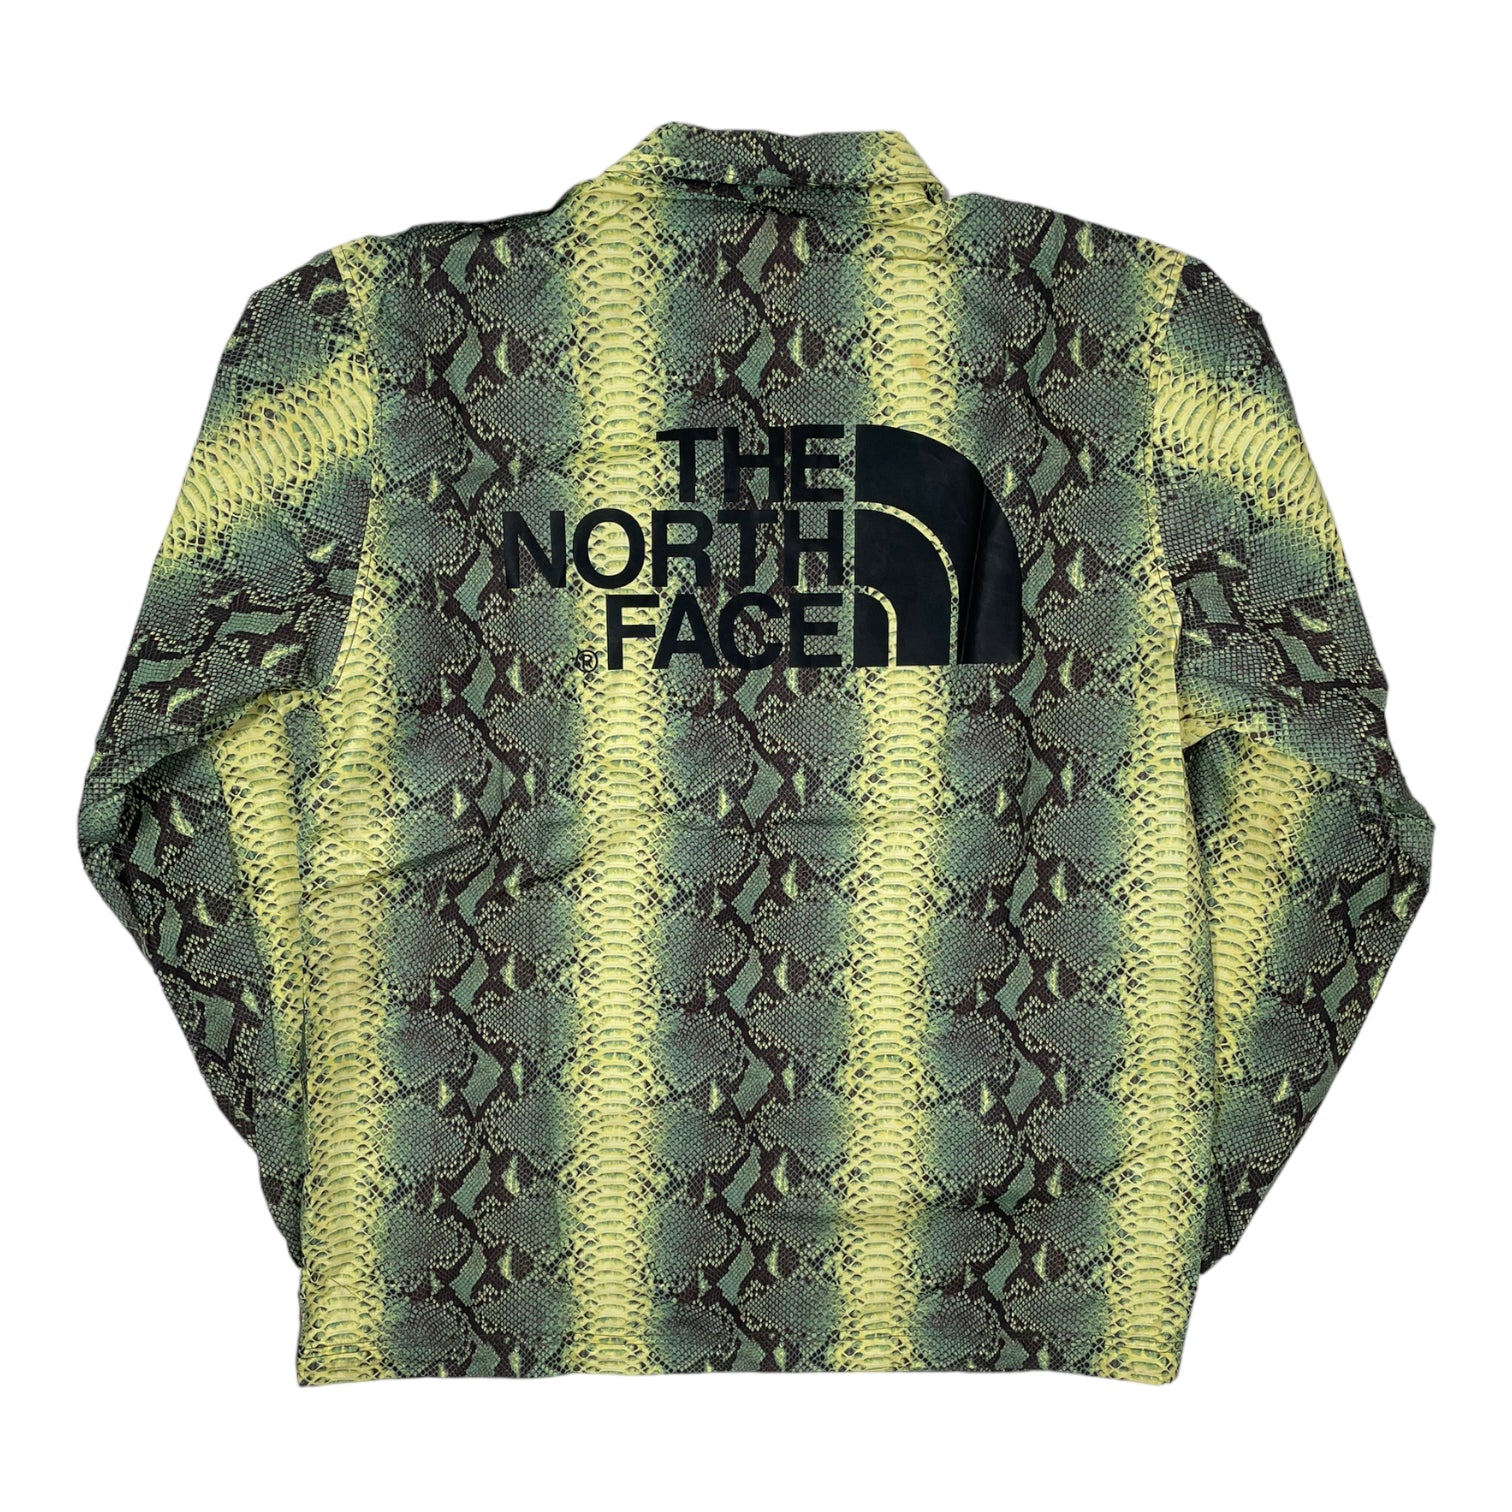 Streetwear Jacket Sale with Origins NYC 🚩 - Supreme The North